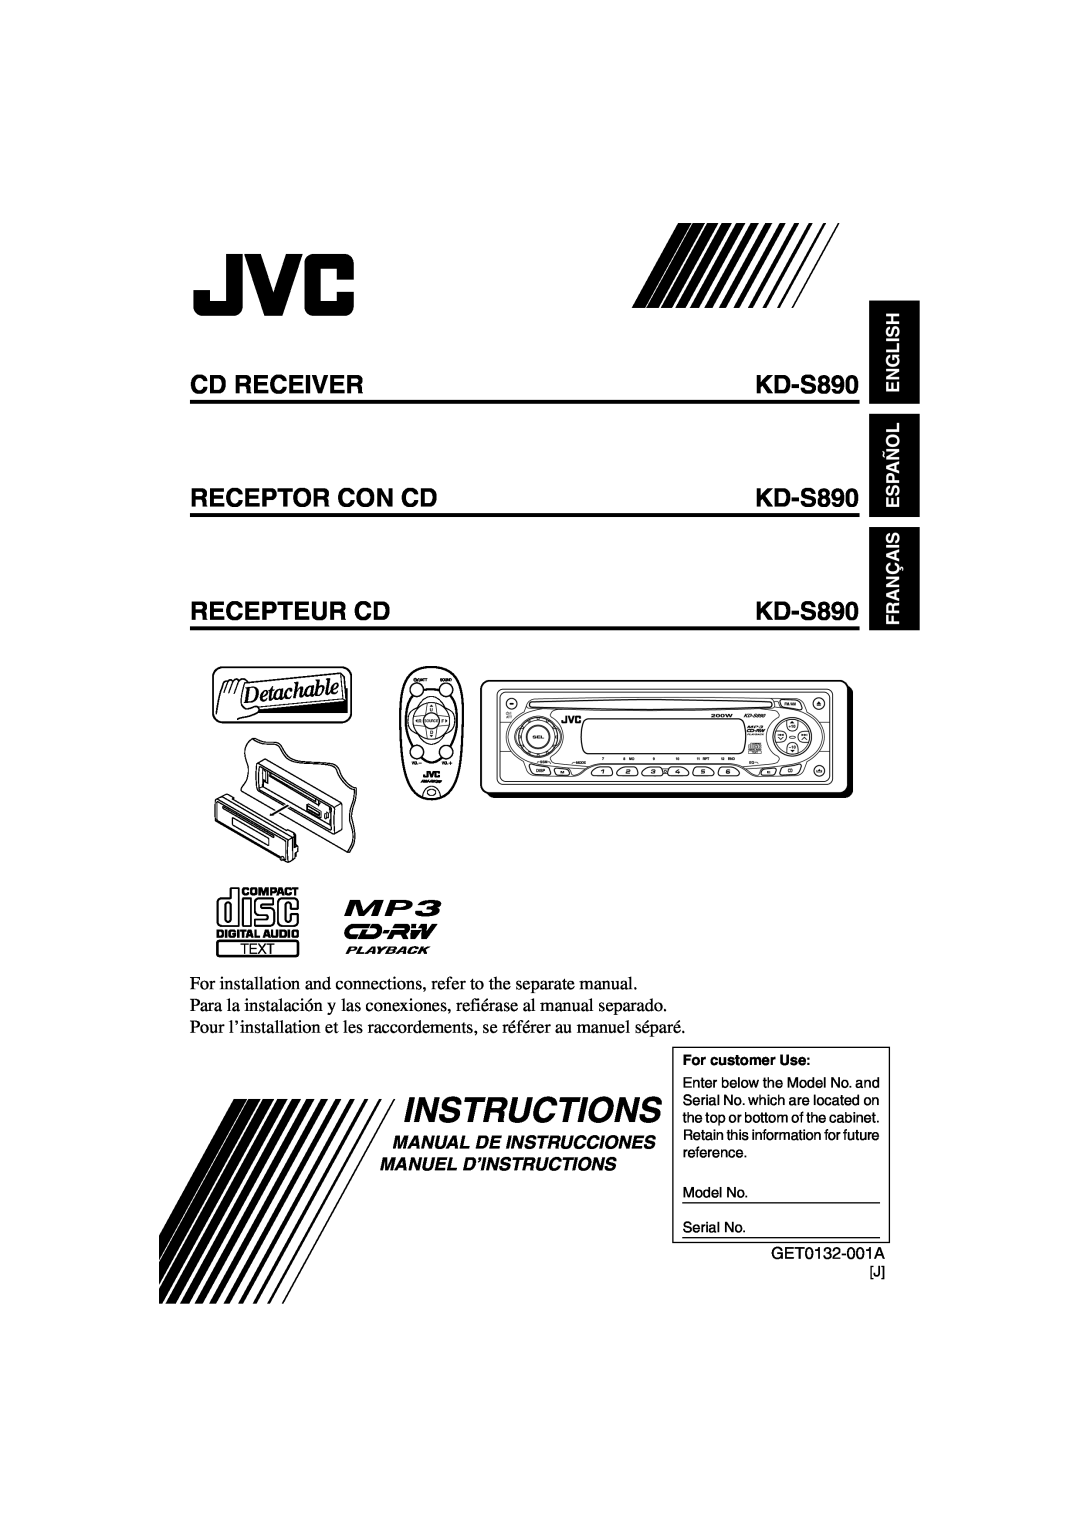 JVC manual Cd Receiver Receptor Con Cd Recepteur Cd, KD-S890 KD-S890 KD-S890, Français Español English, Instructions 